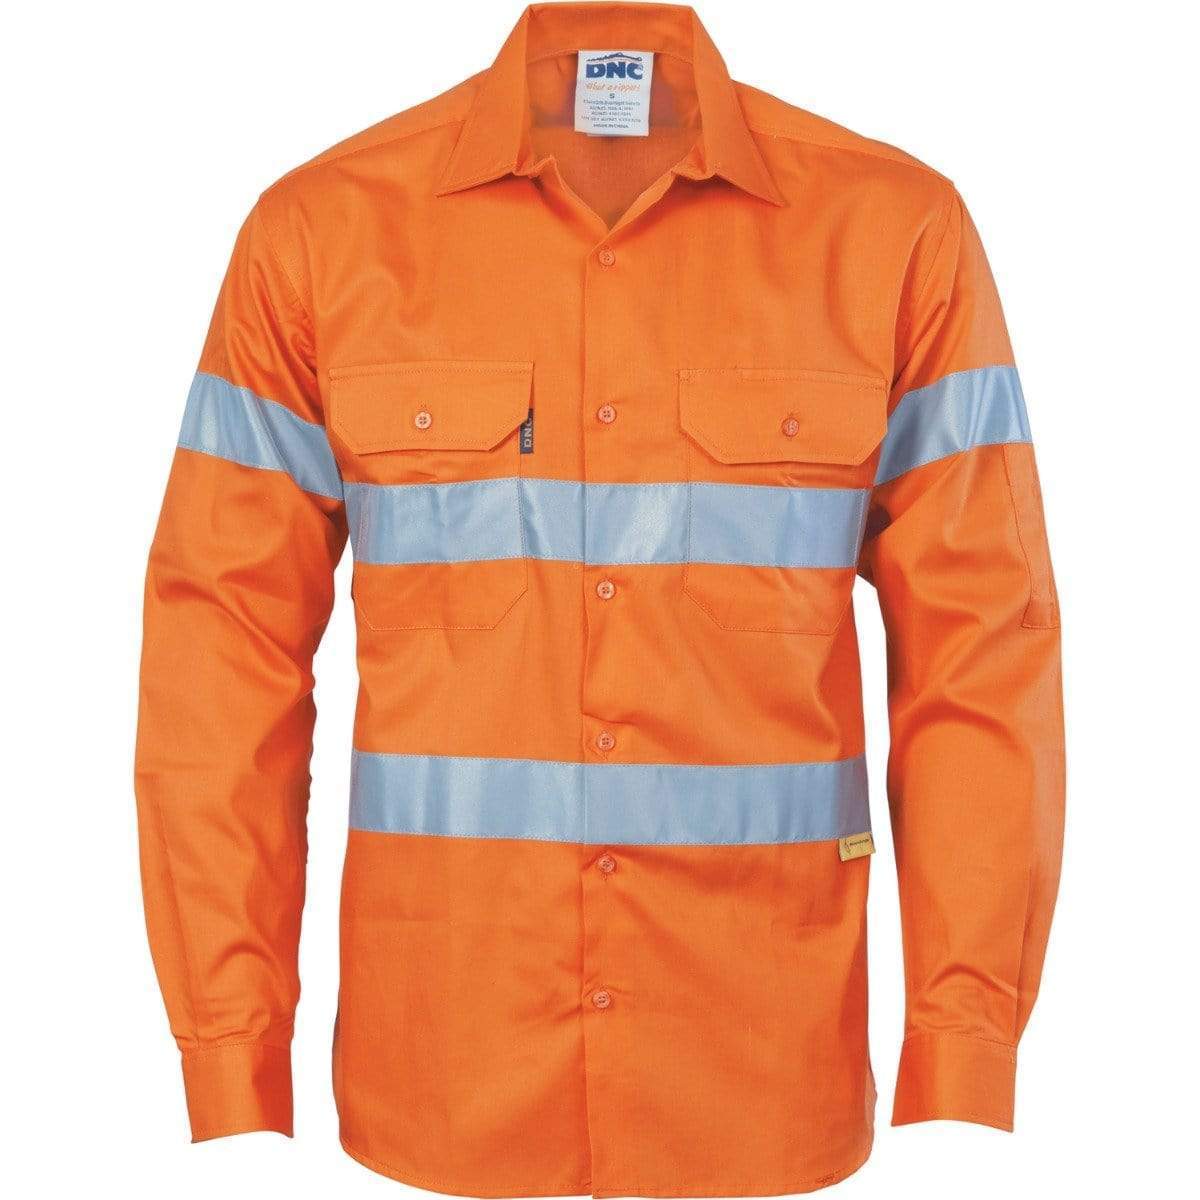 Dnc Workwear Hi-vis Cool-breeze Cotton Long Sleeve Shirt With 3m 8910 Reflective Tape - 3885 Work Wear DNC Workwear Orange S 